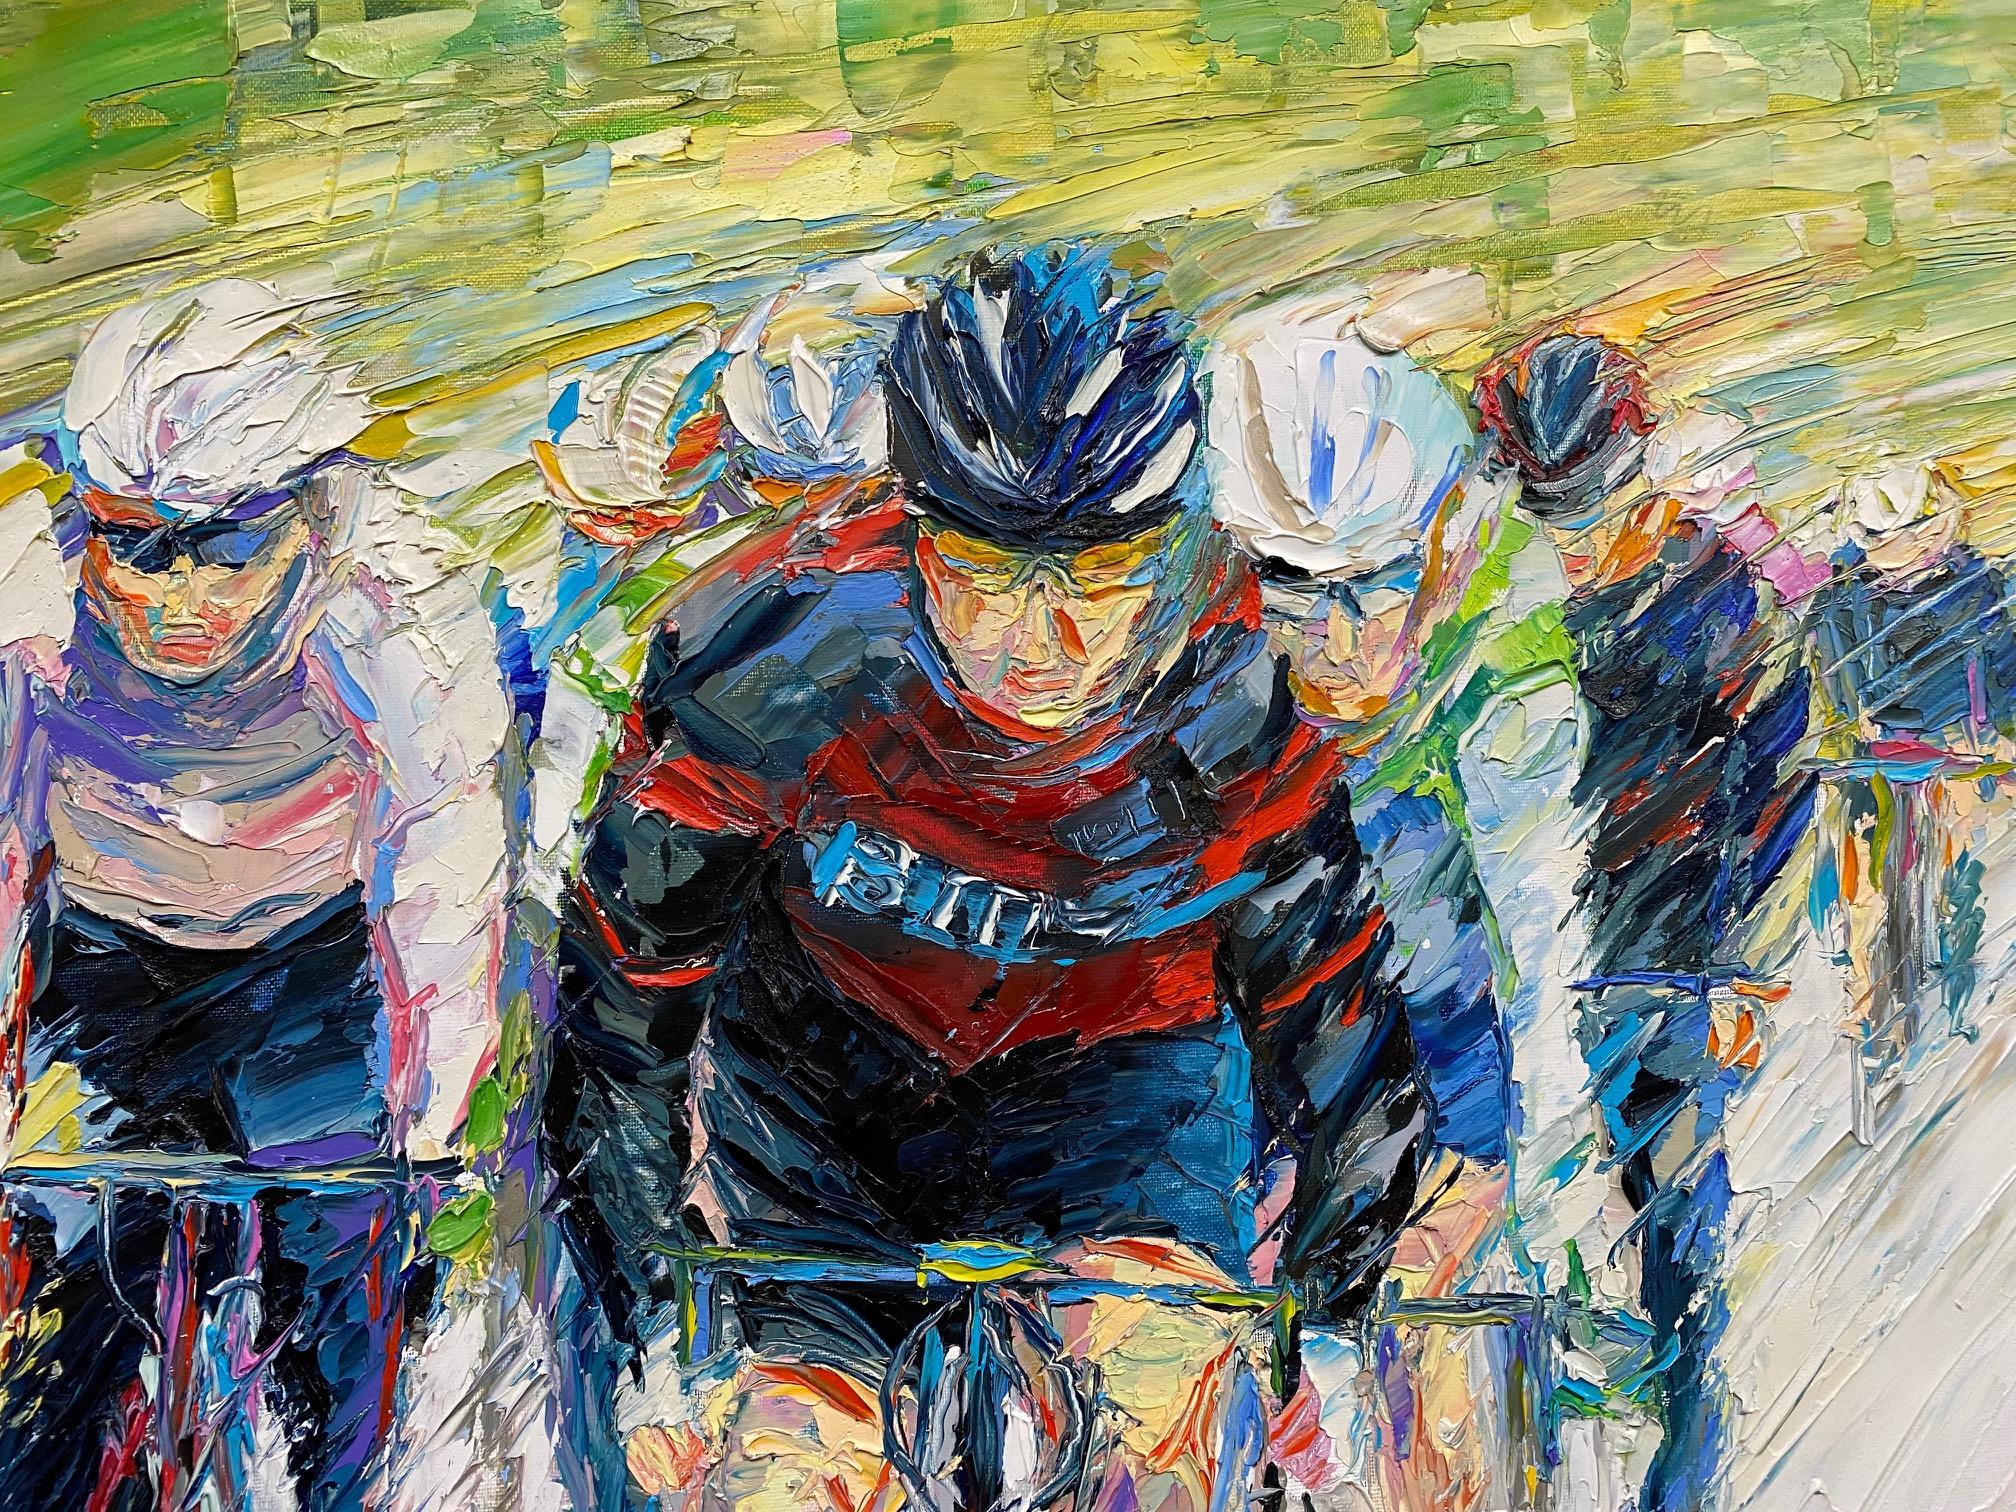 Tour de France, original 31x40 expressionist figurative landscape - Expressionist Painting by Serge Ovcaruk